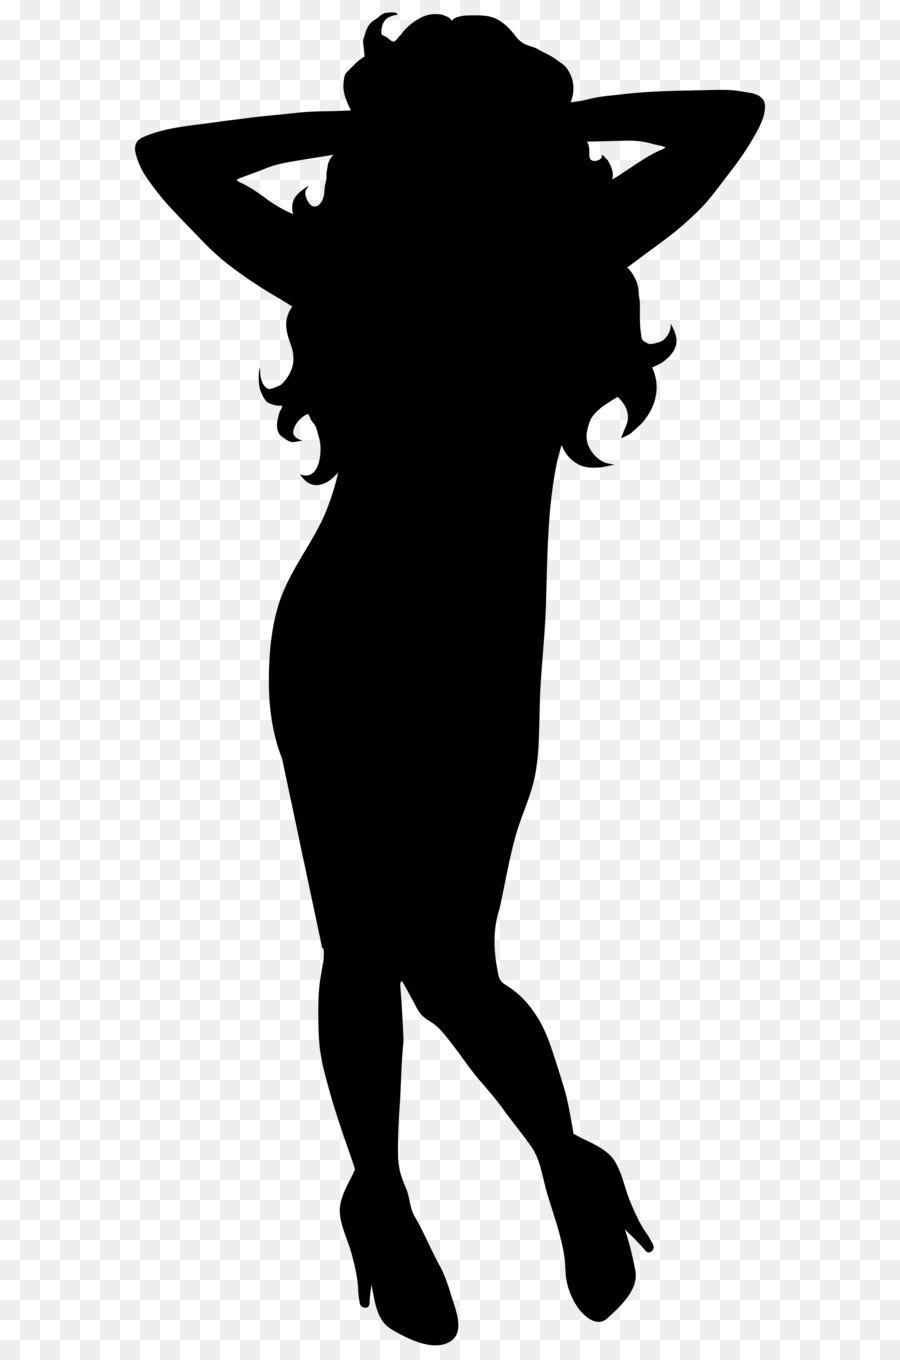 Silhouette Dance Clip art - Dancing Woman Silhouette Clip Art Image png download - 3837*8000 - Free Transparent Silhouette png Download.